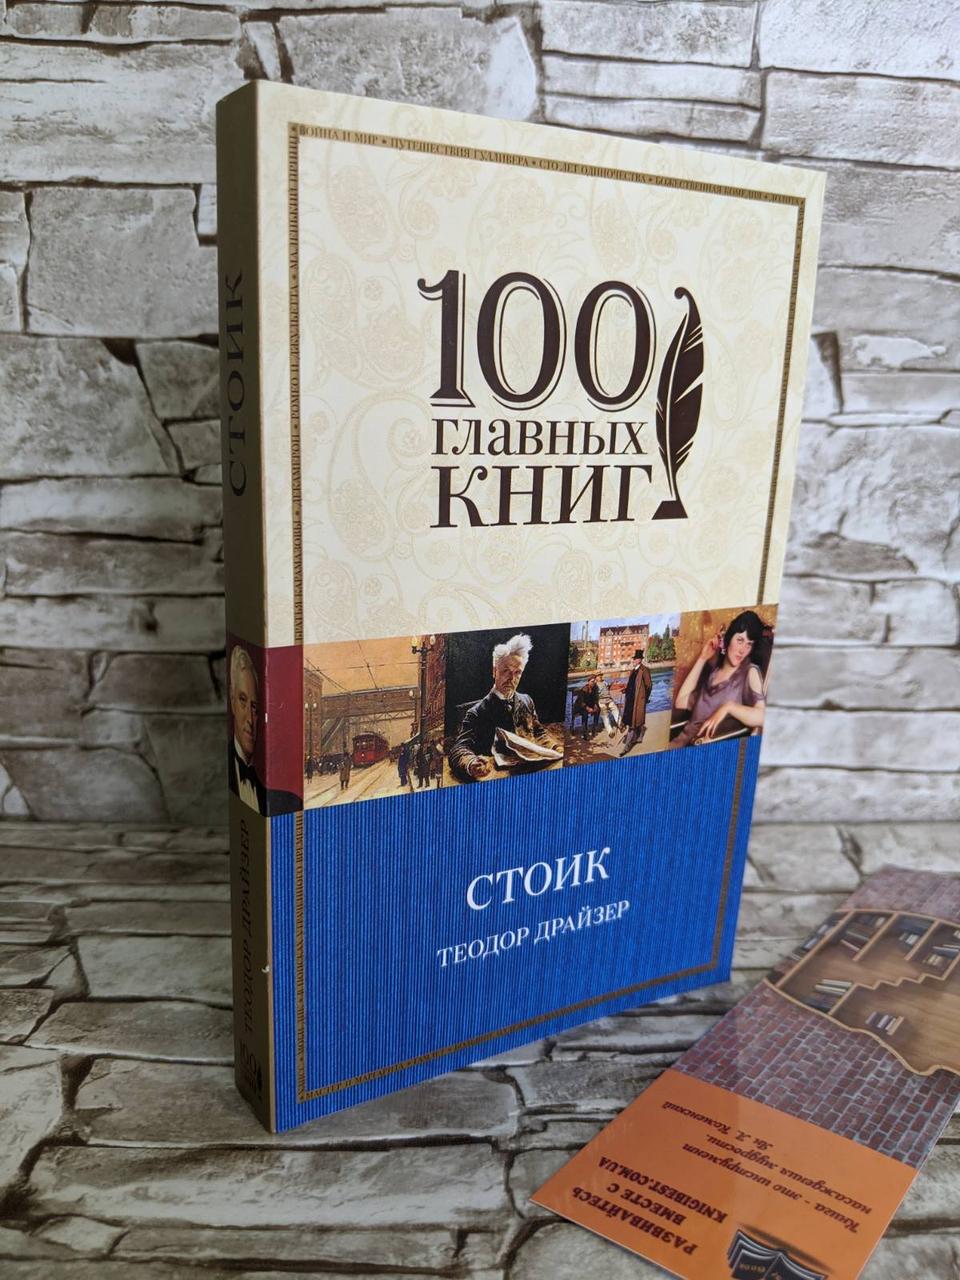 Книга "Стоїк" Теодор Драйзер (100 головних книг)